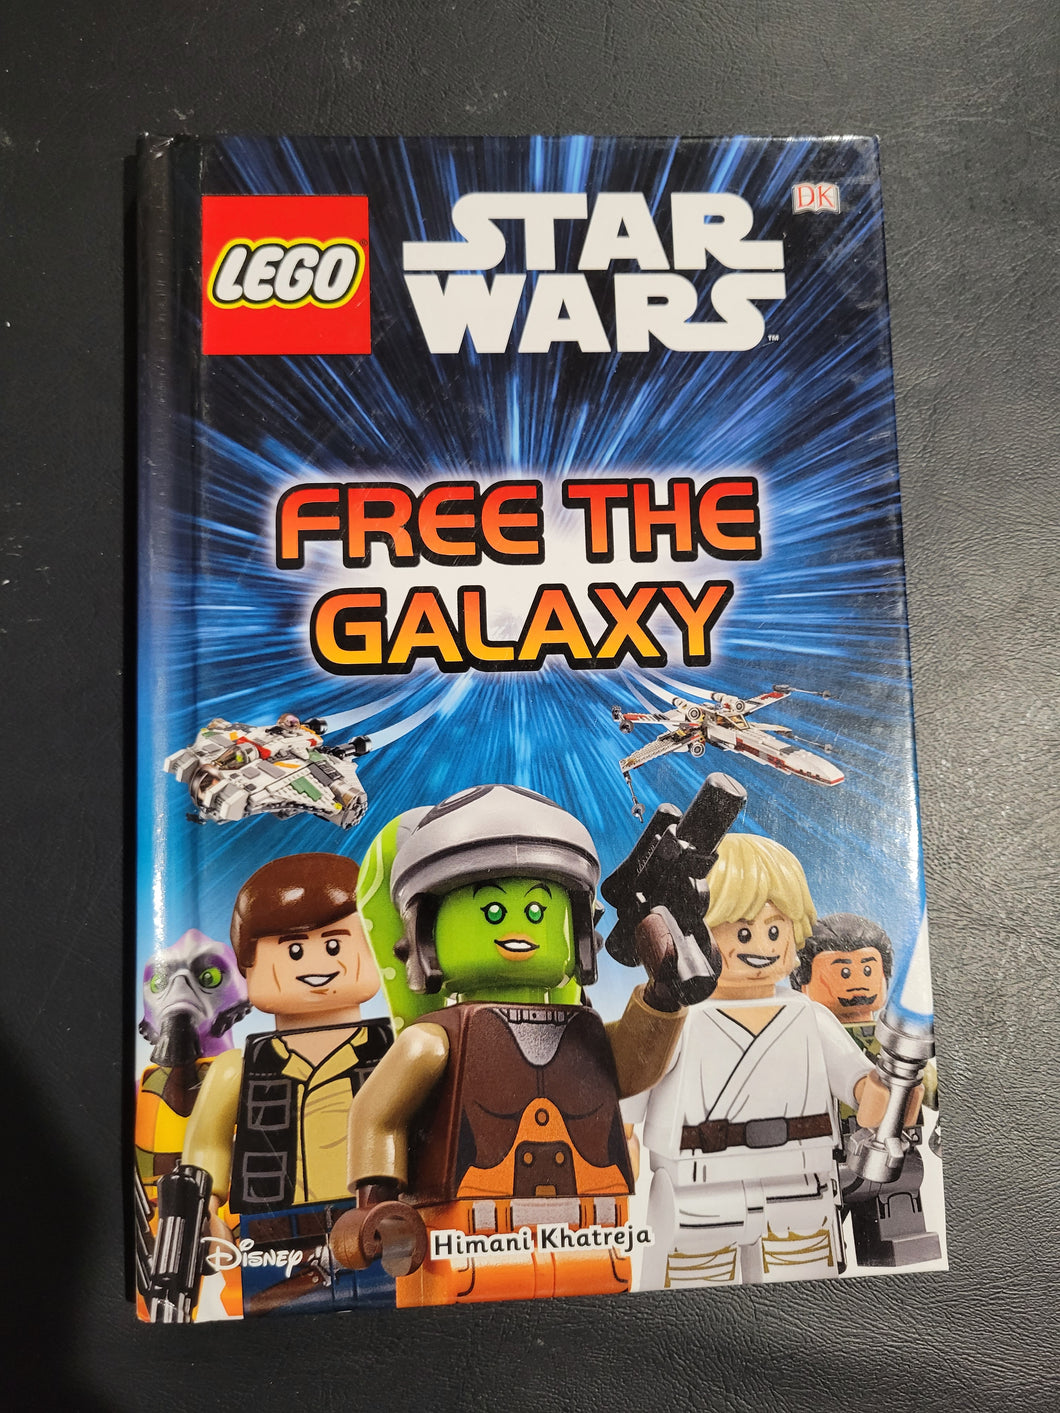 Lego Star Wars Free the Galaxy (Hardcover)